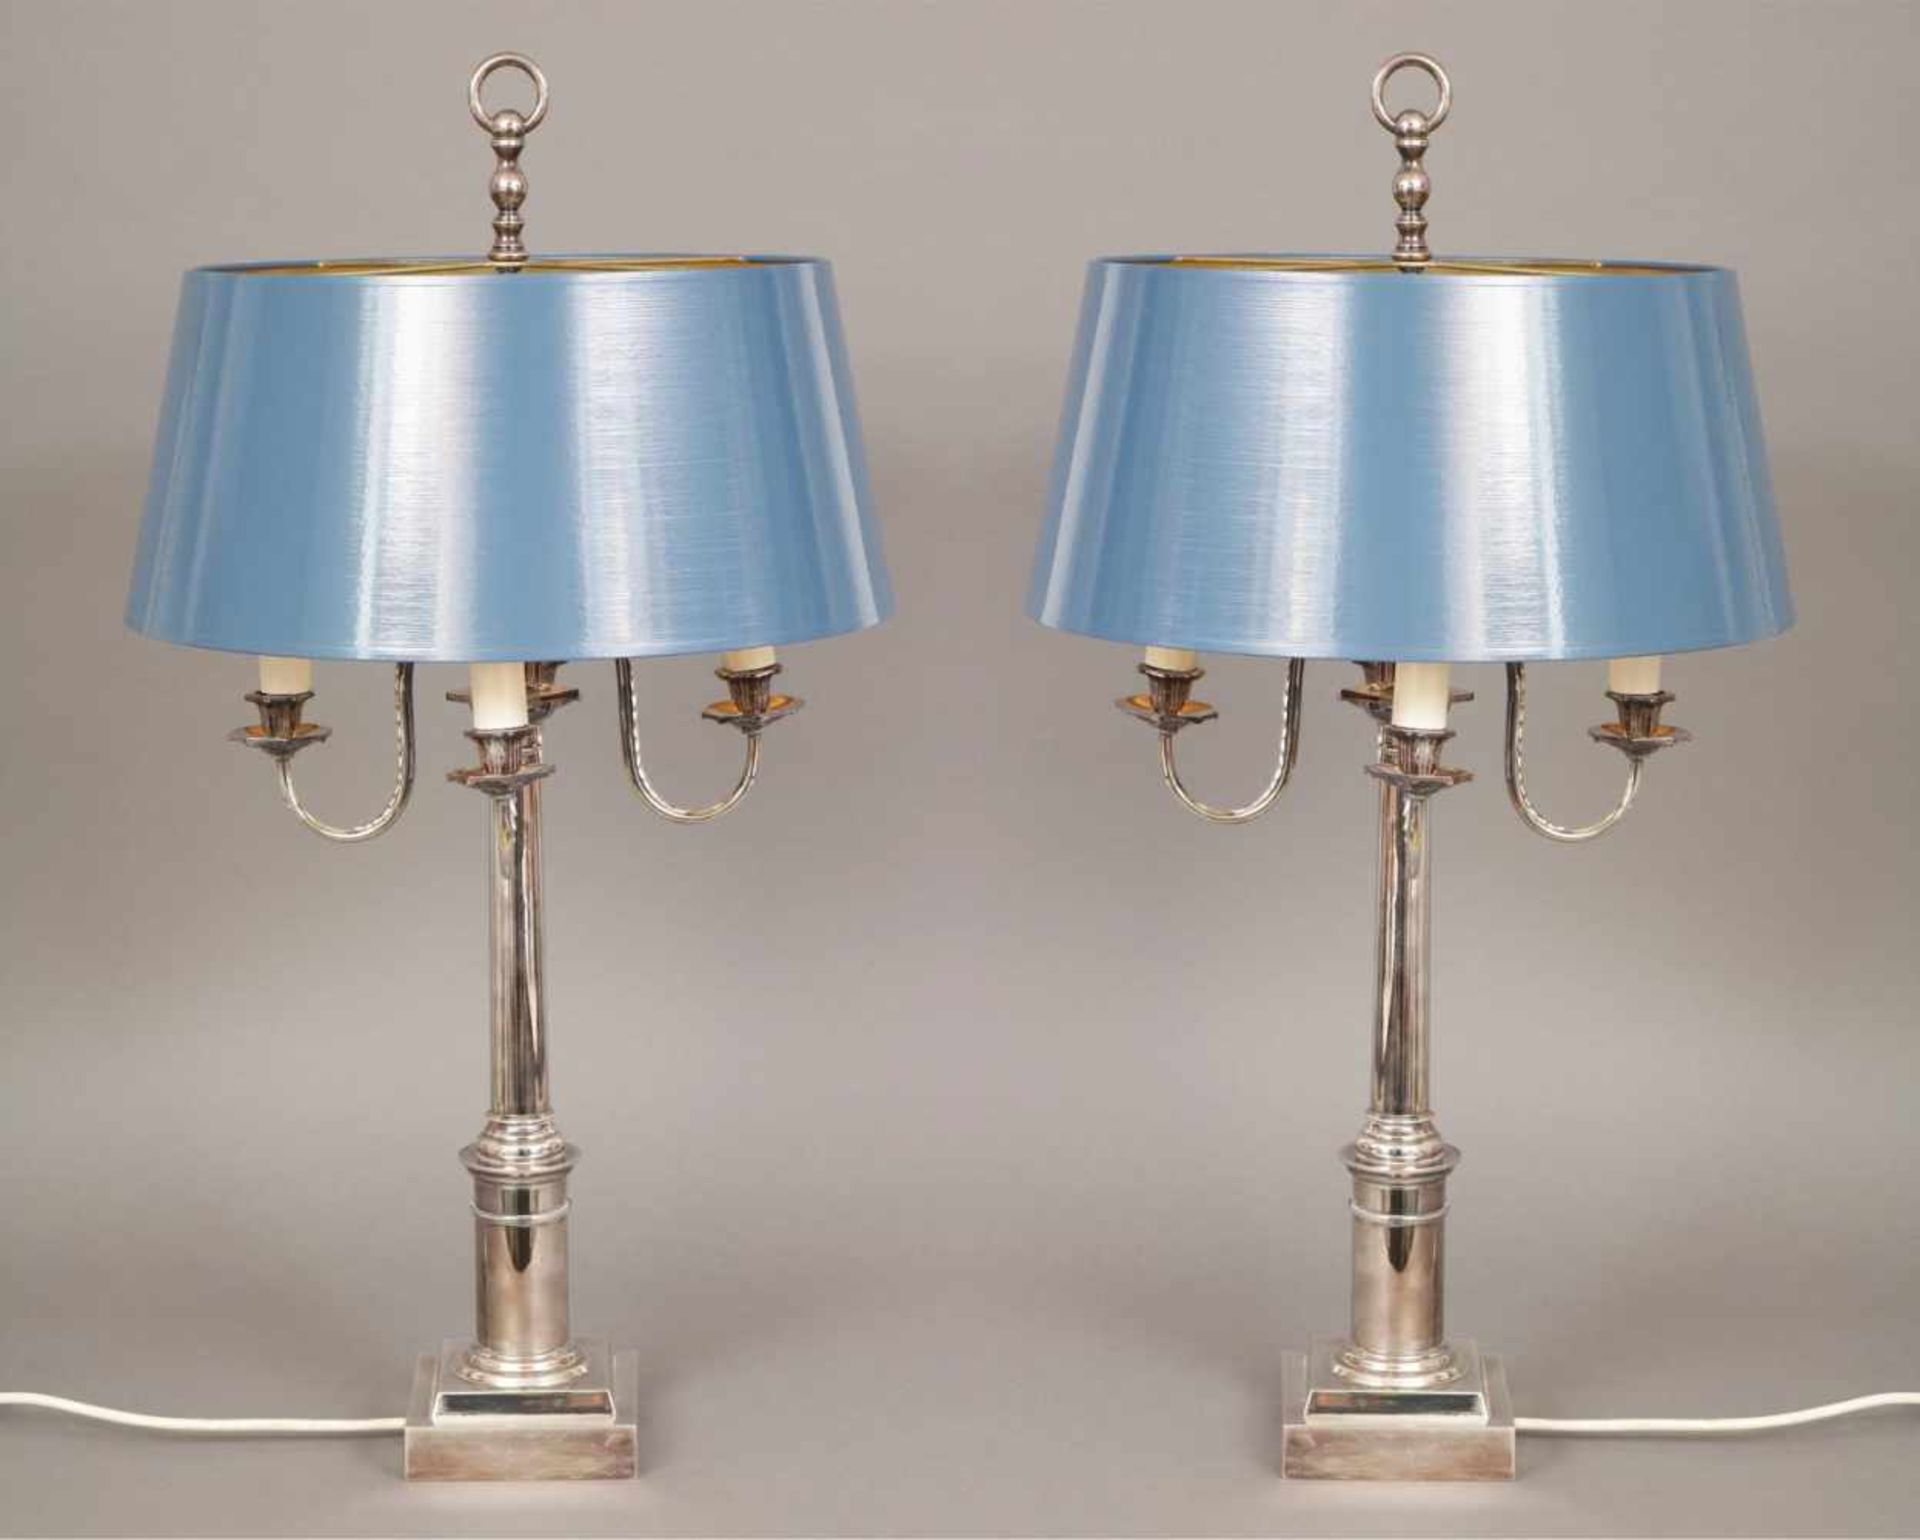 Paar Lampen im Bouilotte-Stilversilbertes Metall, England, 2. Hälfte 20. Jhdt., Säulenform mit 4